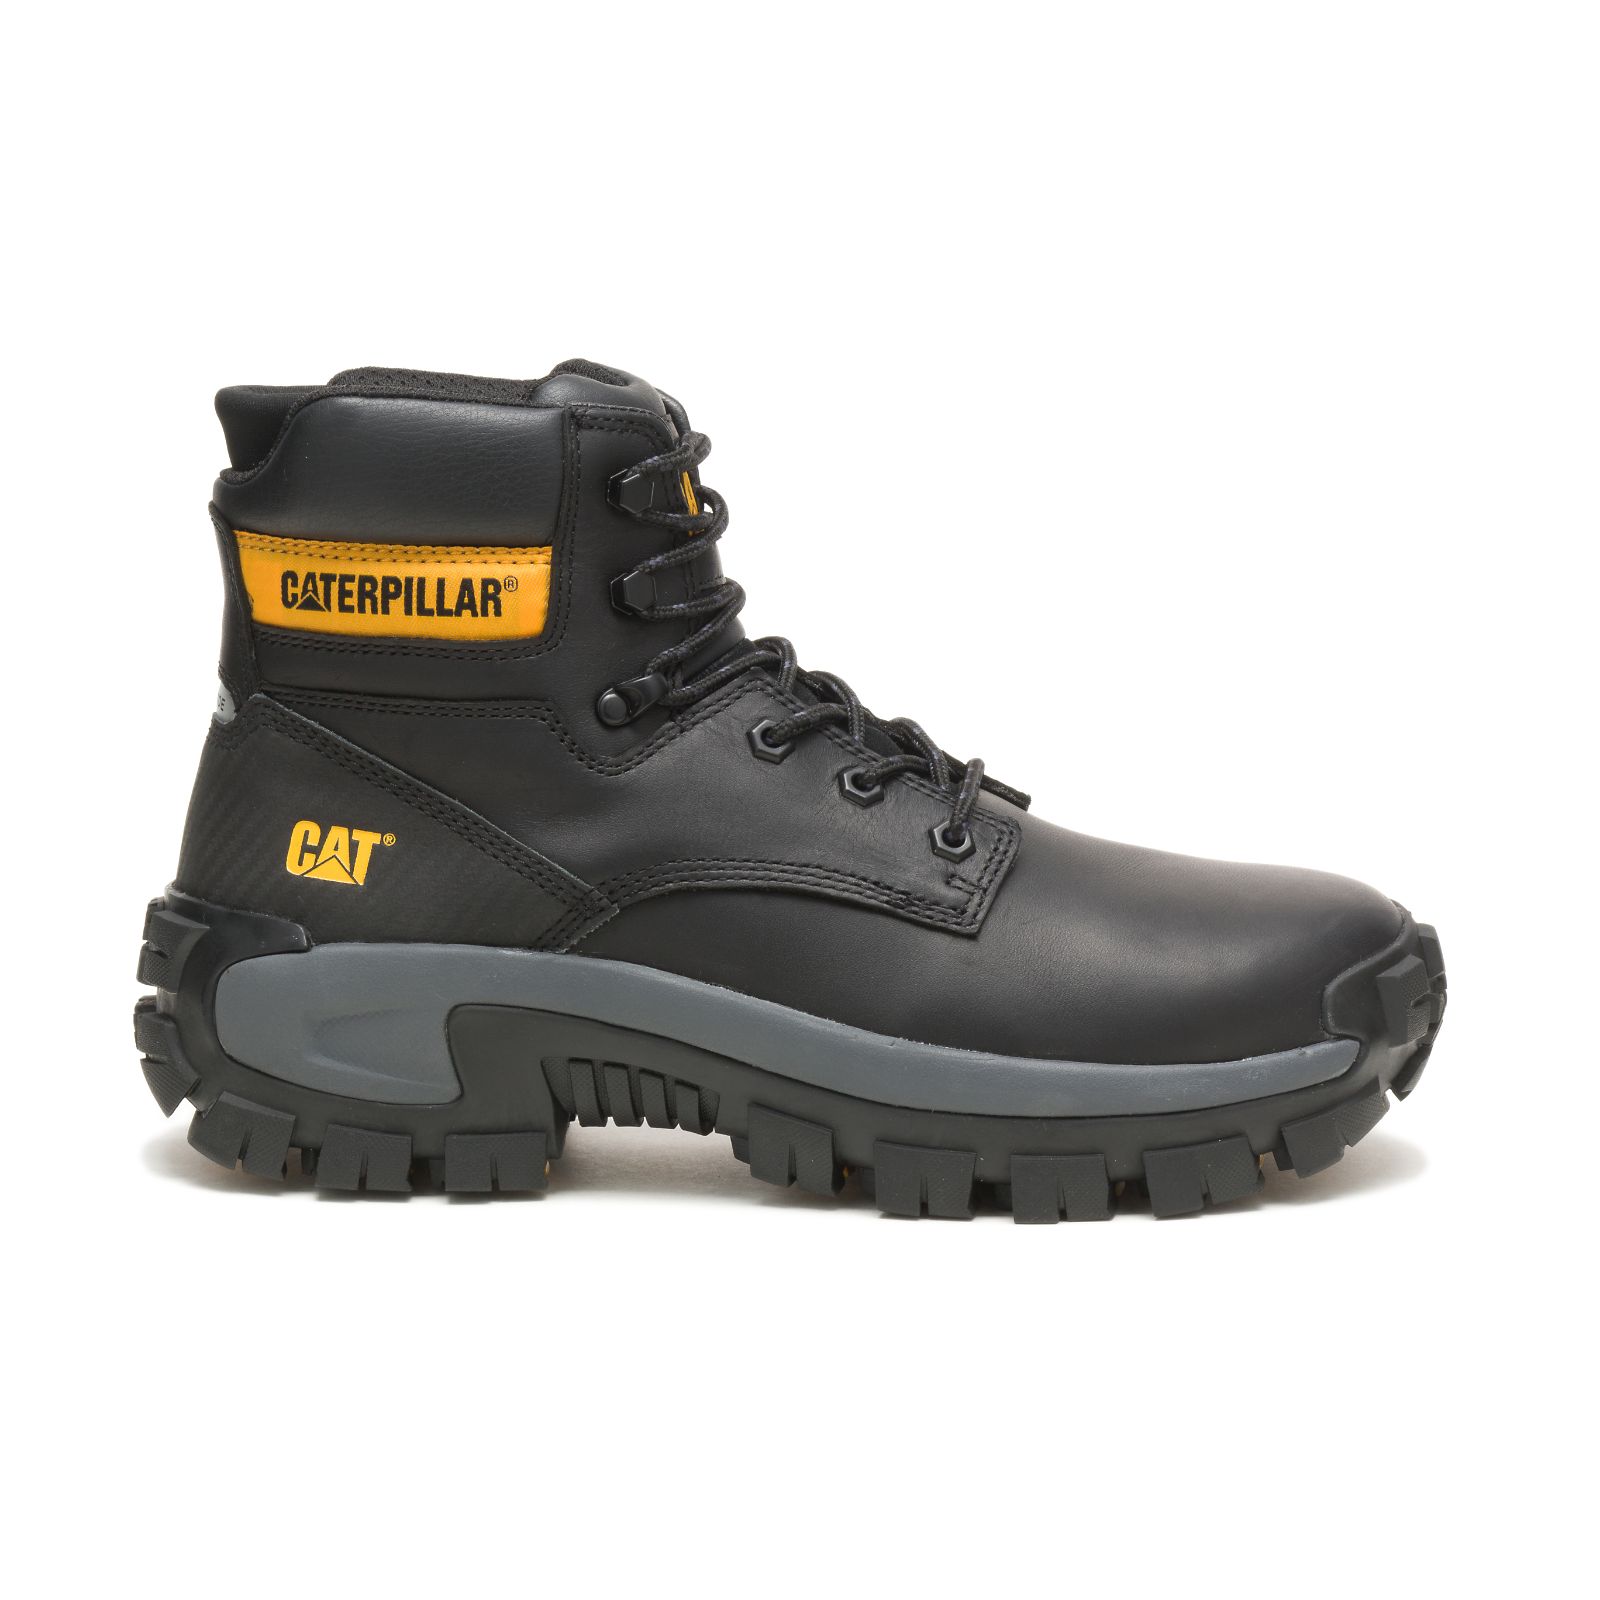 Caterpillar Boots Online Pakistan - Caterpillar Invader Hi Steel Toe Mens Work Boots Black (049581-TFX)